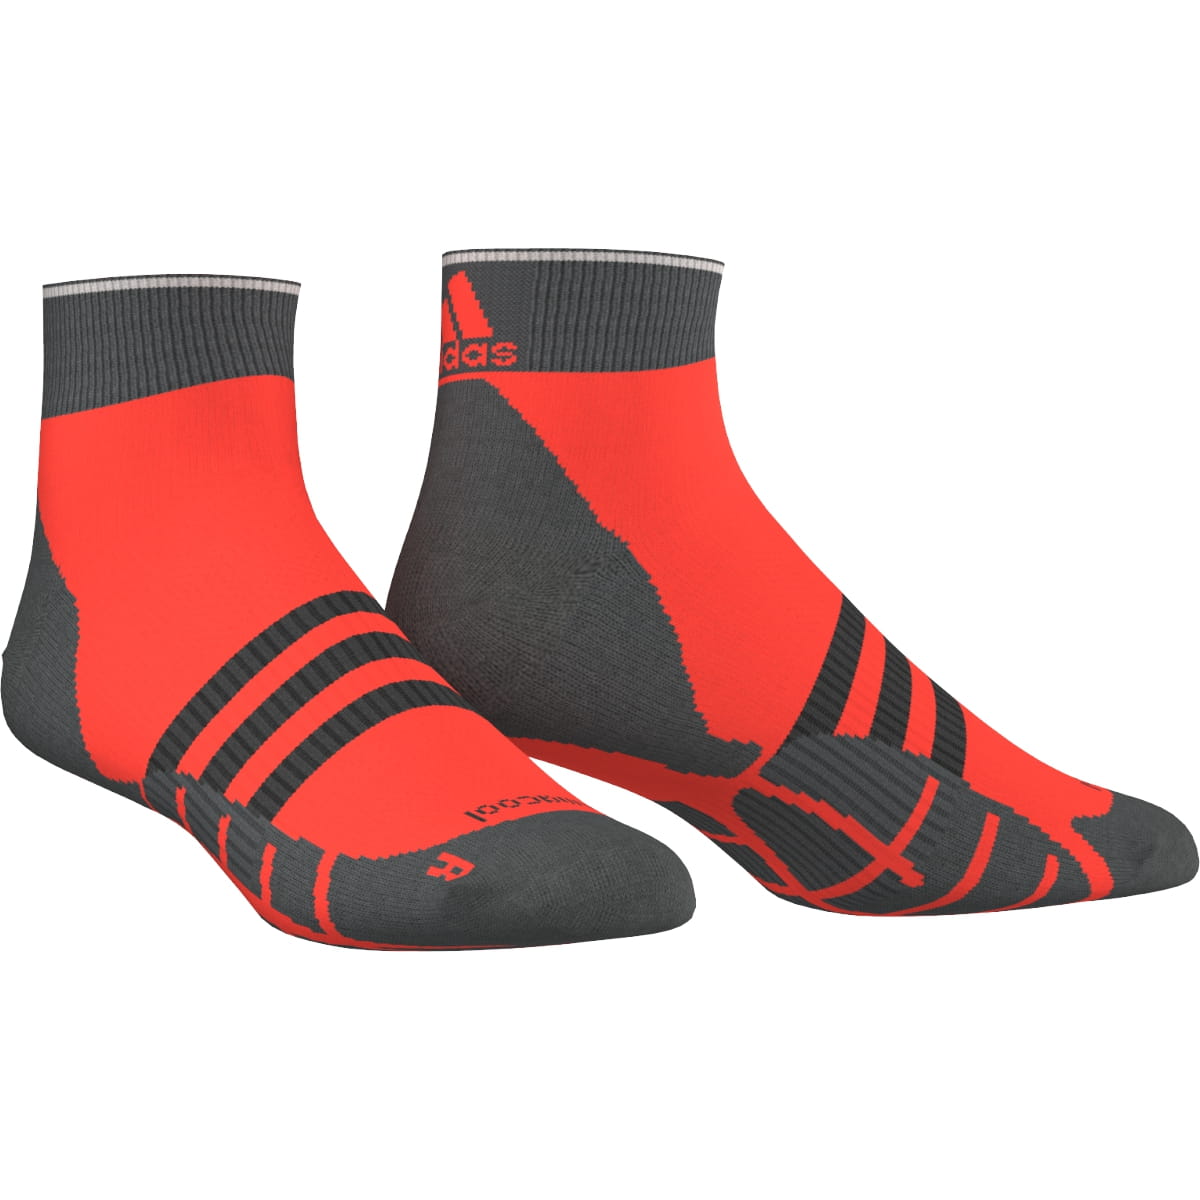 Ponožky adidas run thin-cushioned id ankle socks, 1 pair